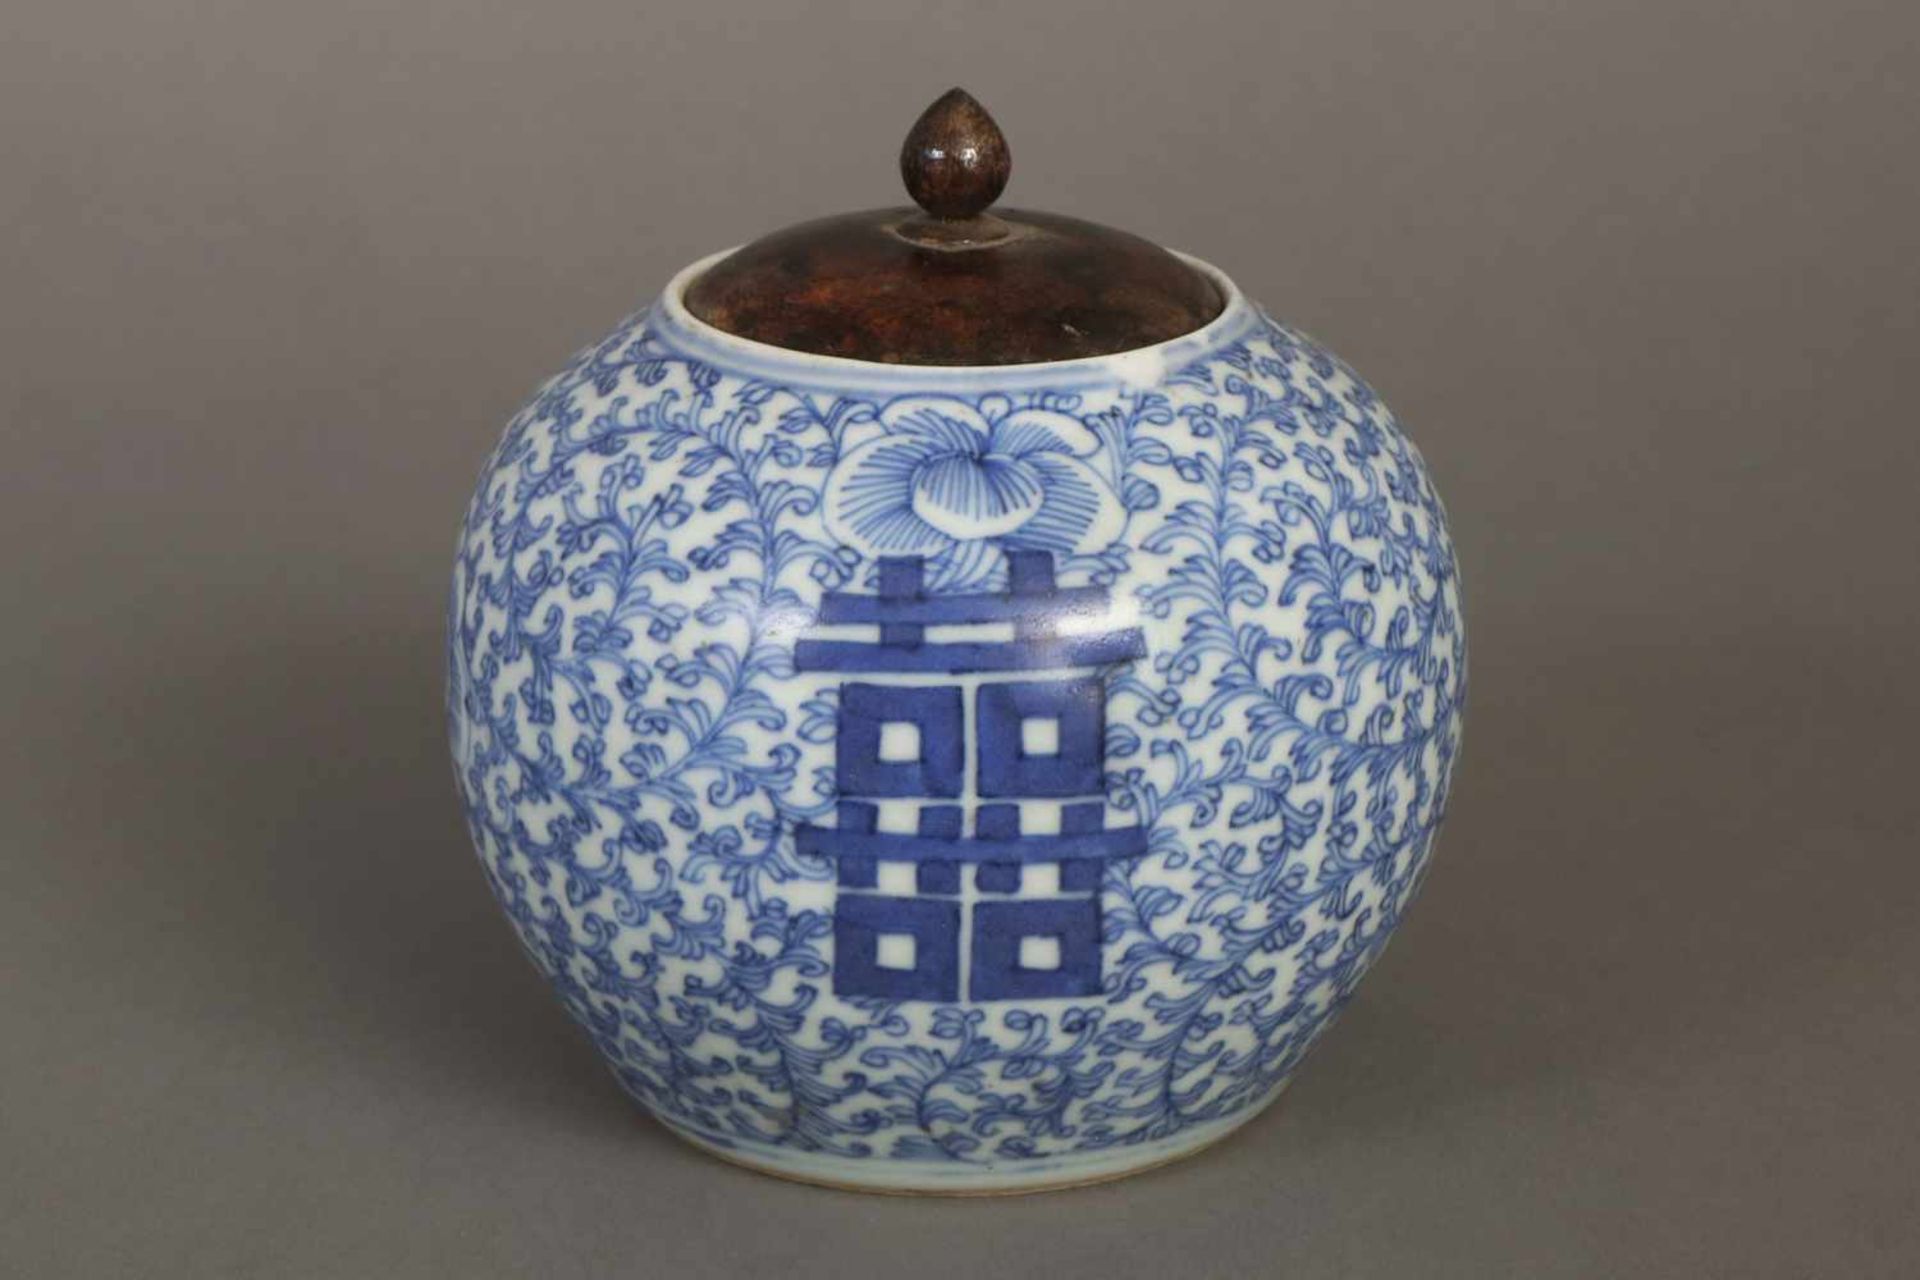 Chinesischer IngwertopfPorzellan, Qing-Dynastie, kugelförmiger Korpus mit Holzdeckel, Wandung